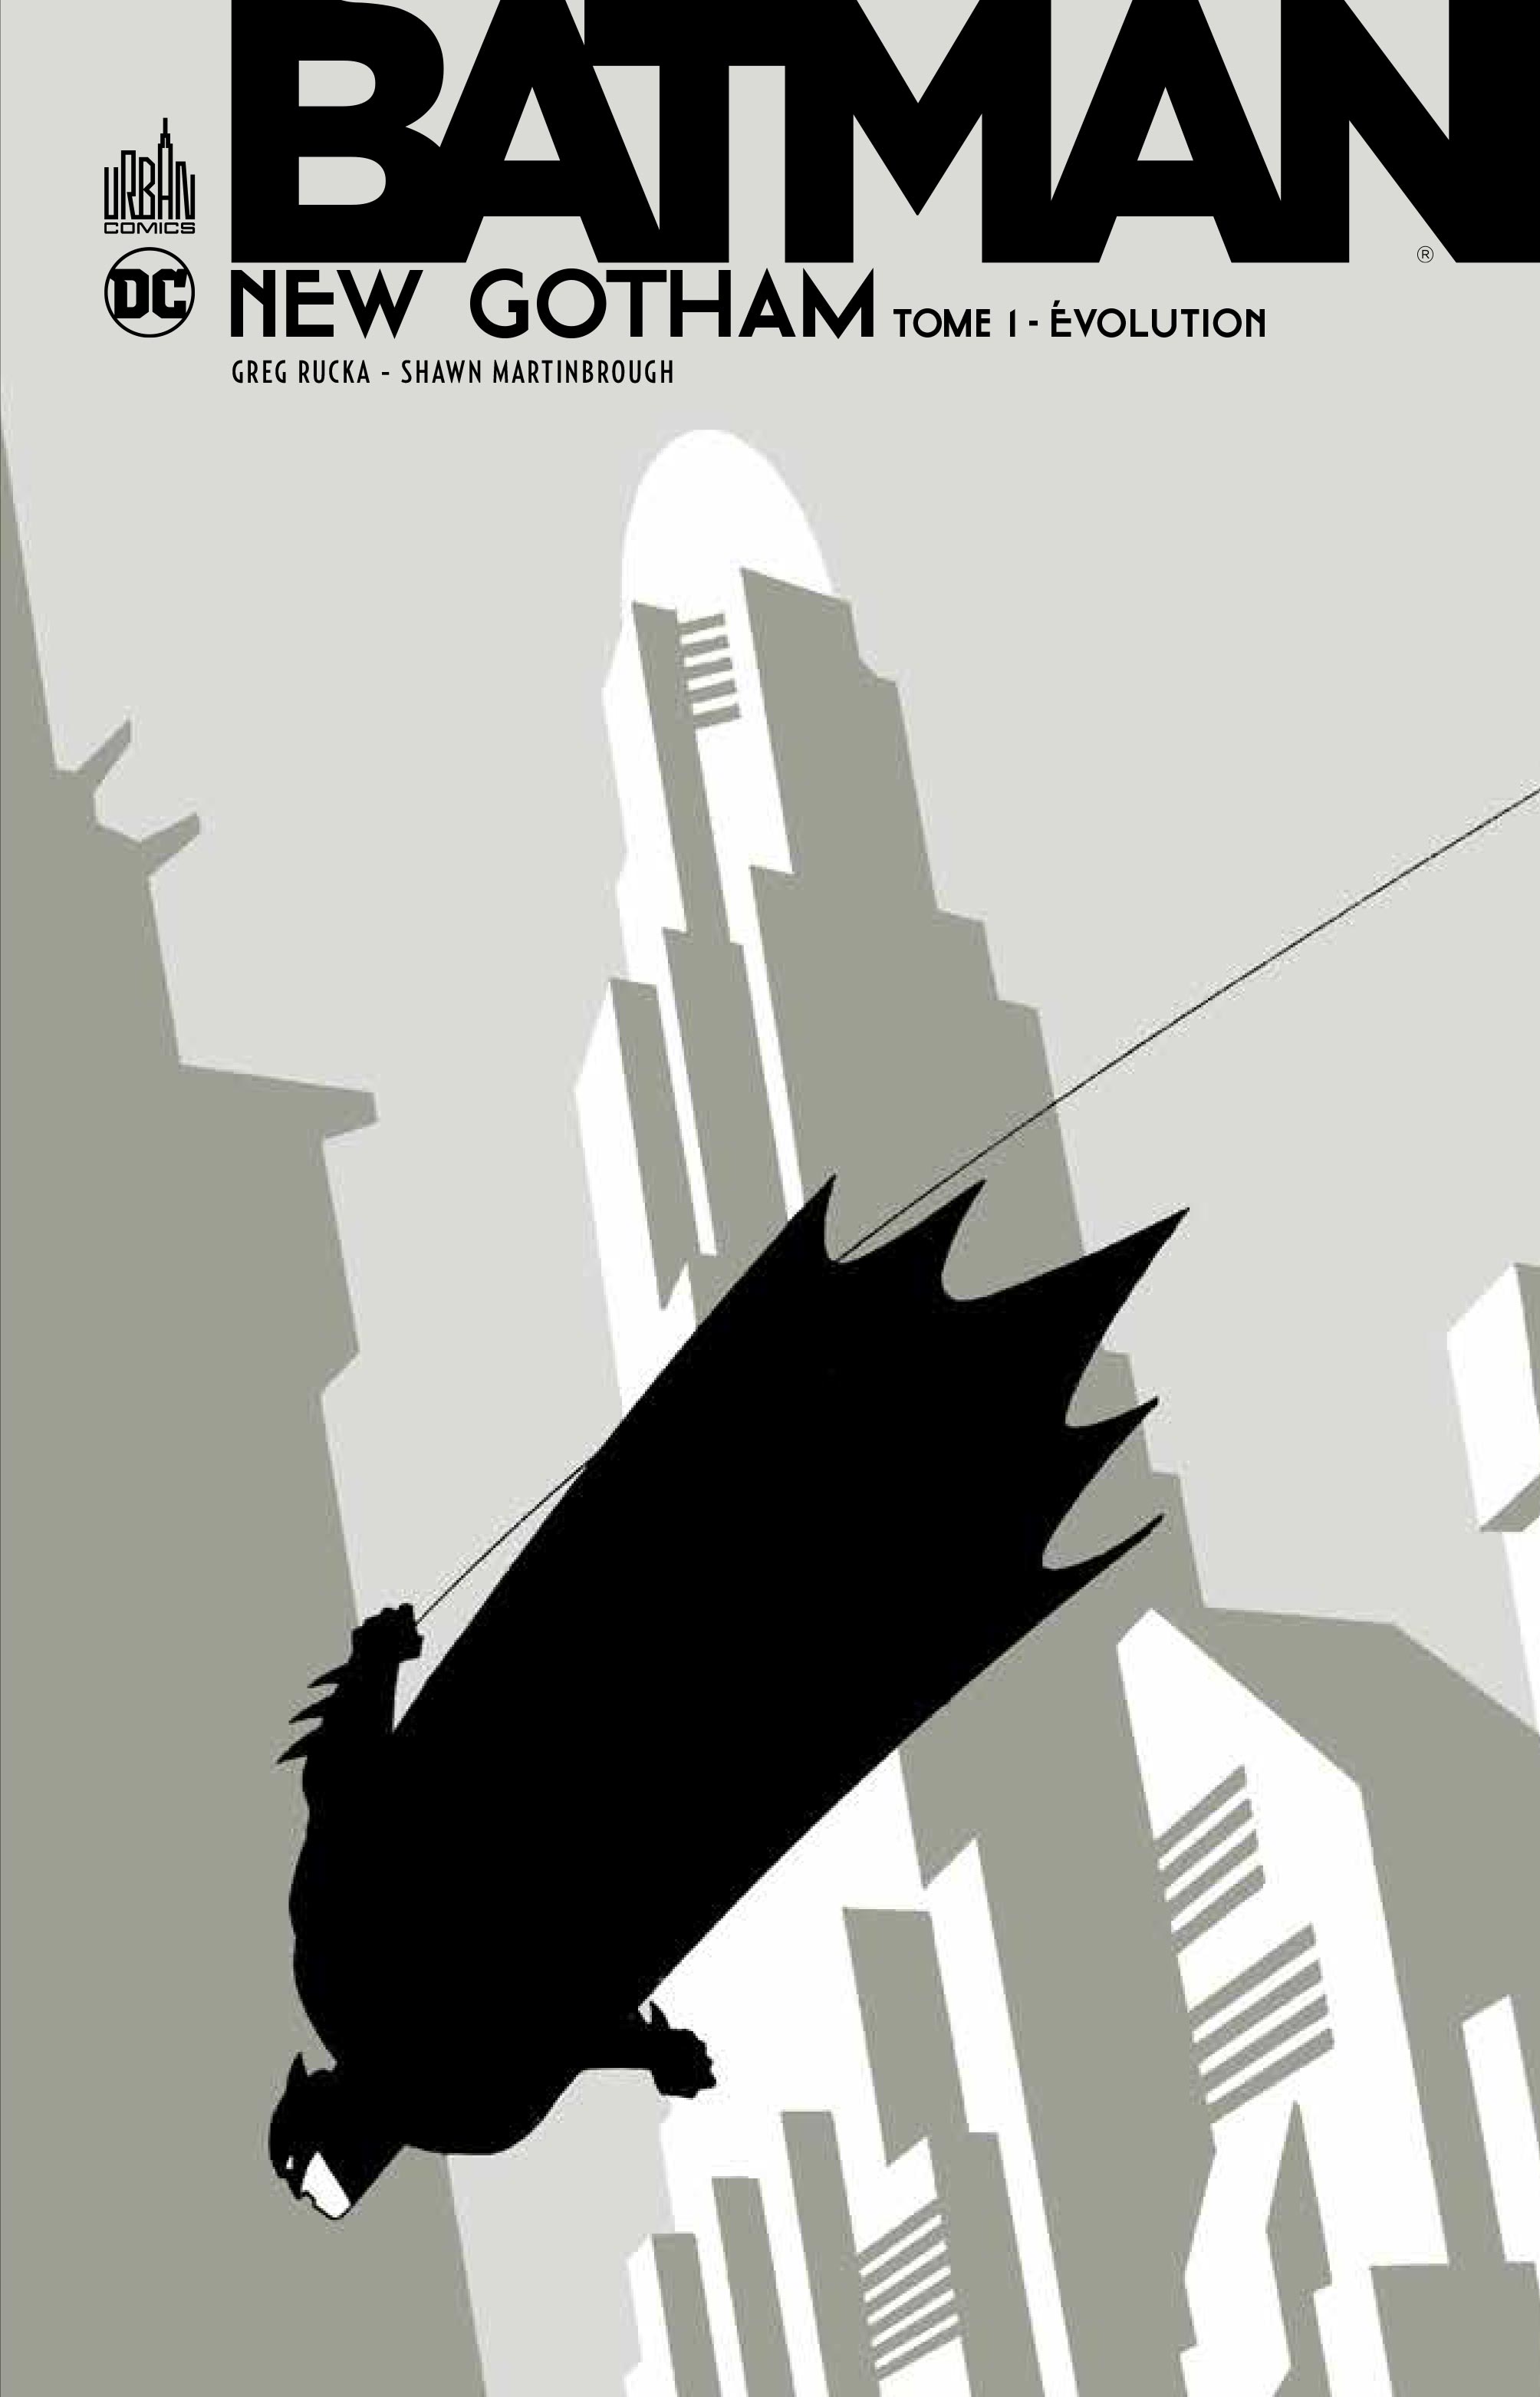 BATMAN NEW GOTHAM – Tome 1 - couv